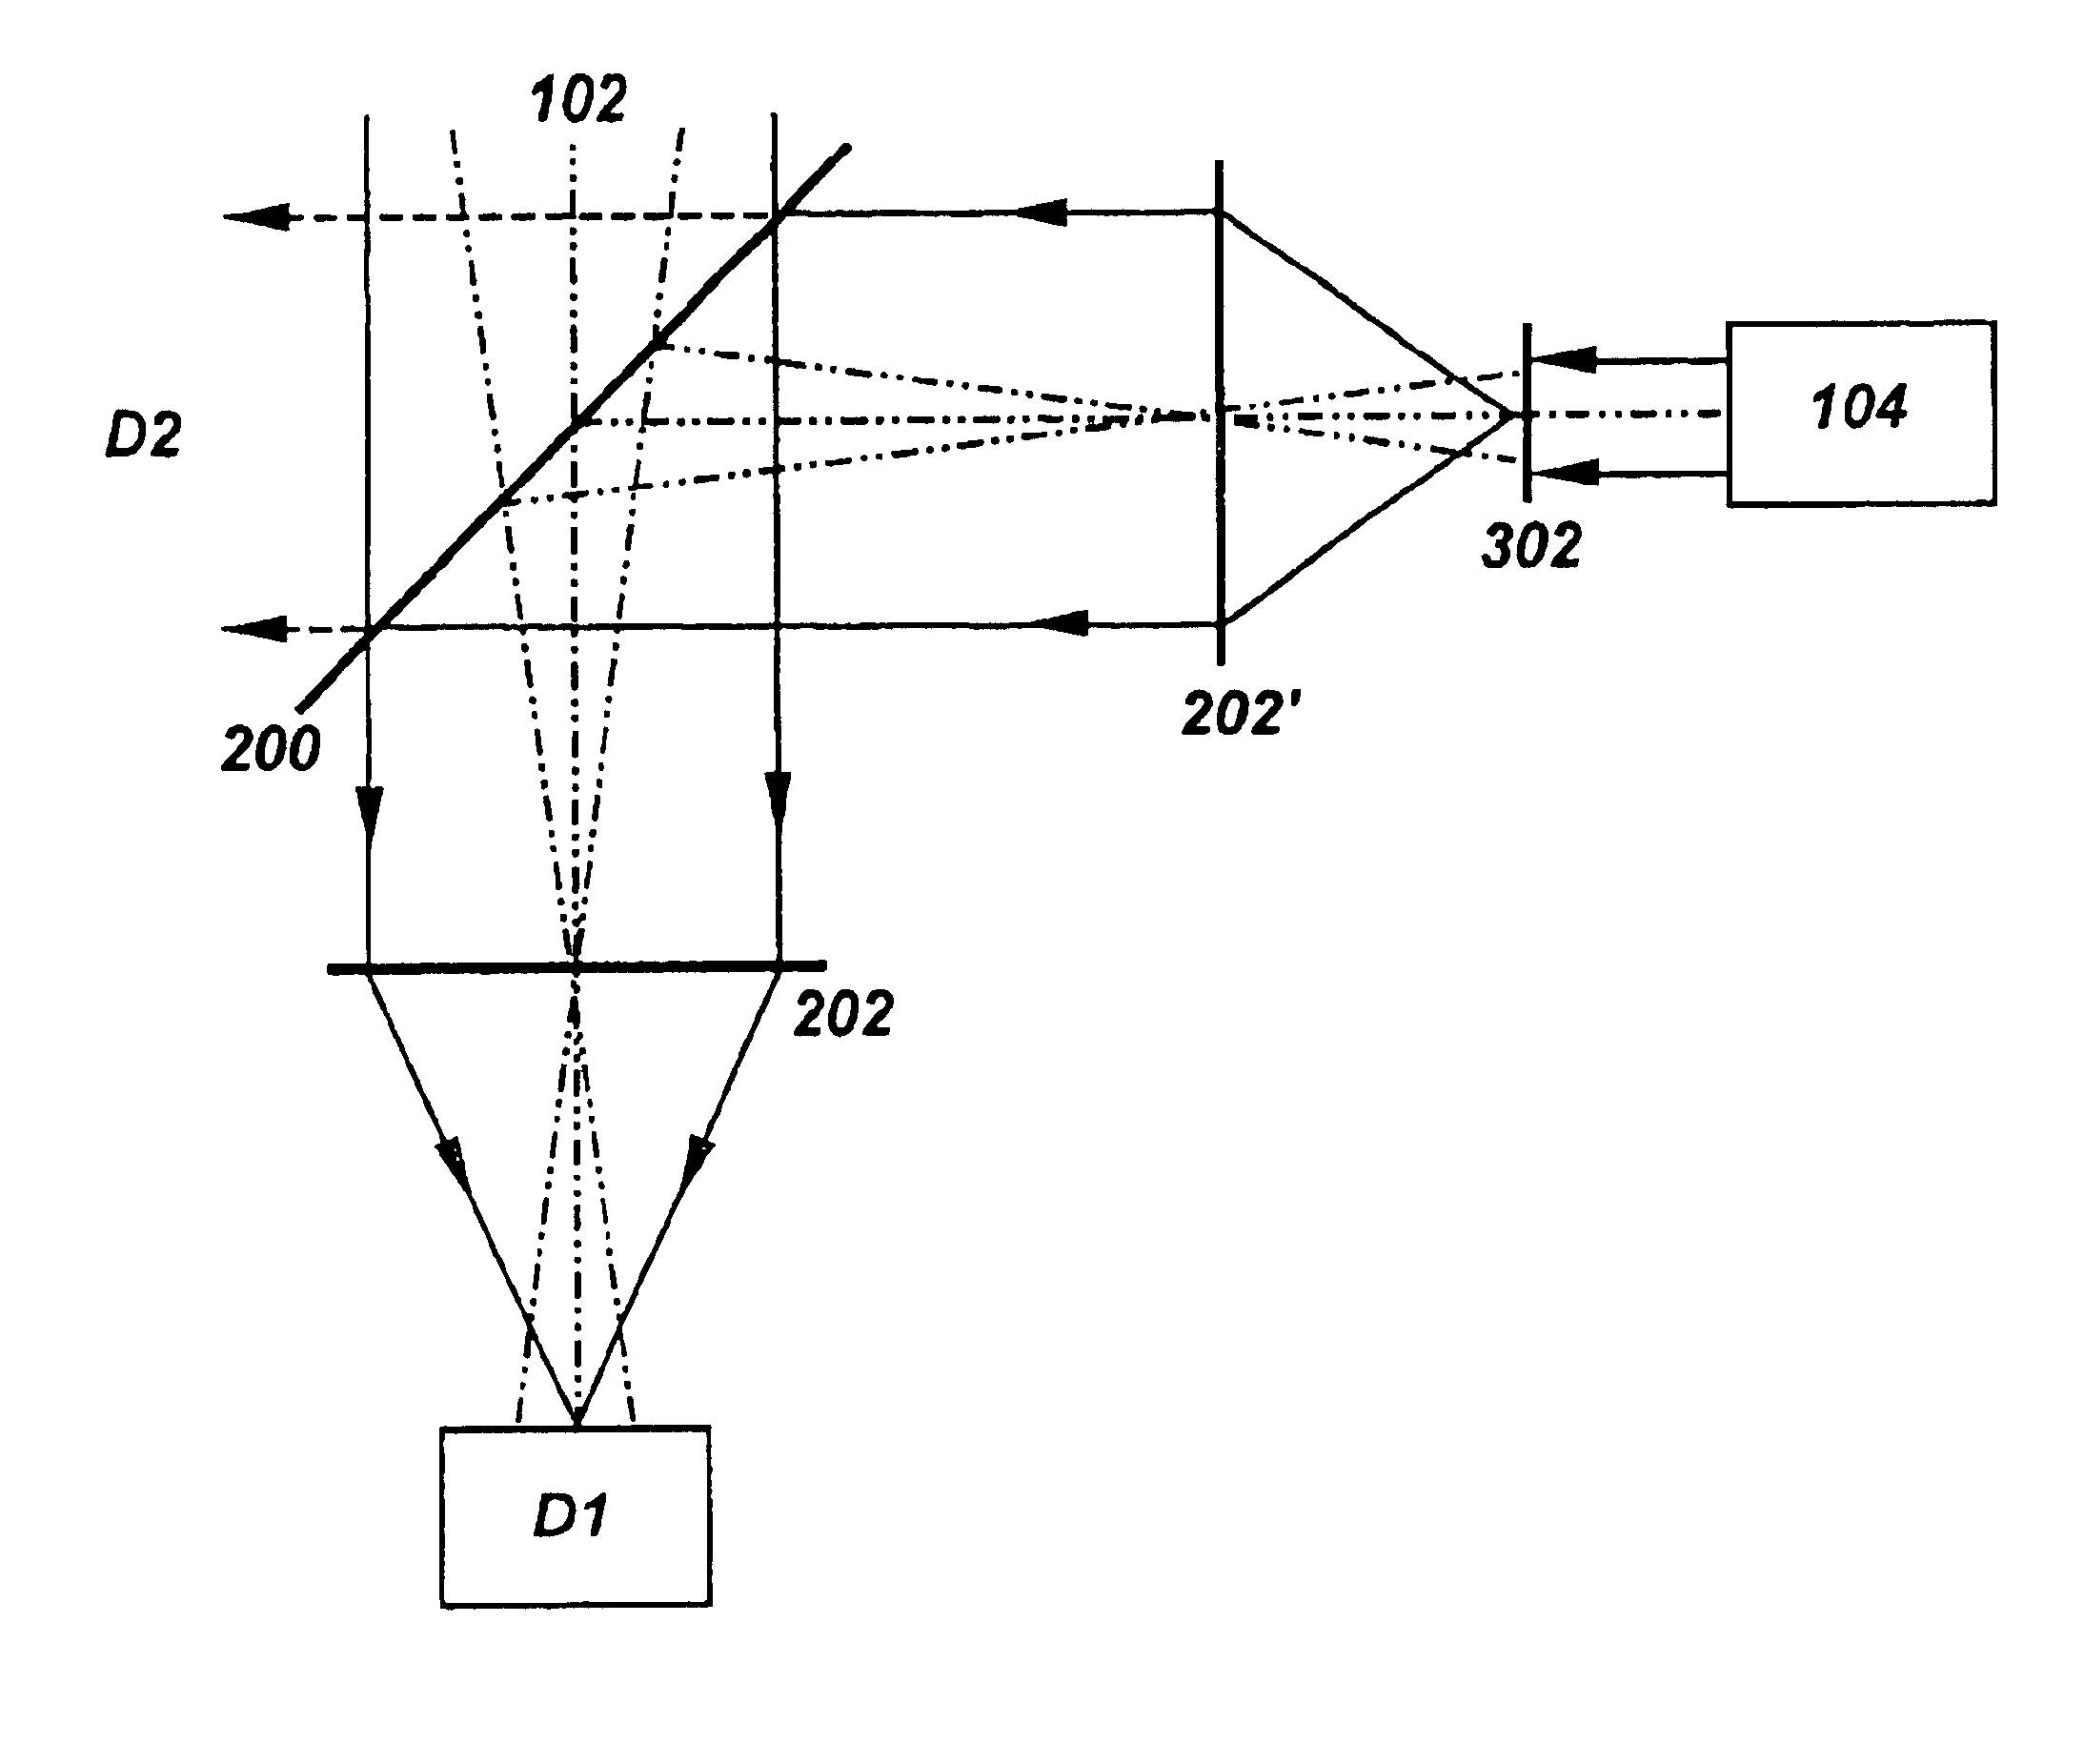 Wide field-of-view (FOV) coherent beam combiner/detector